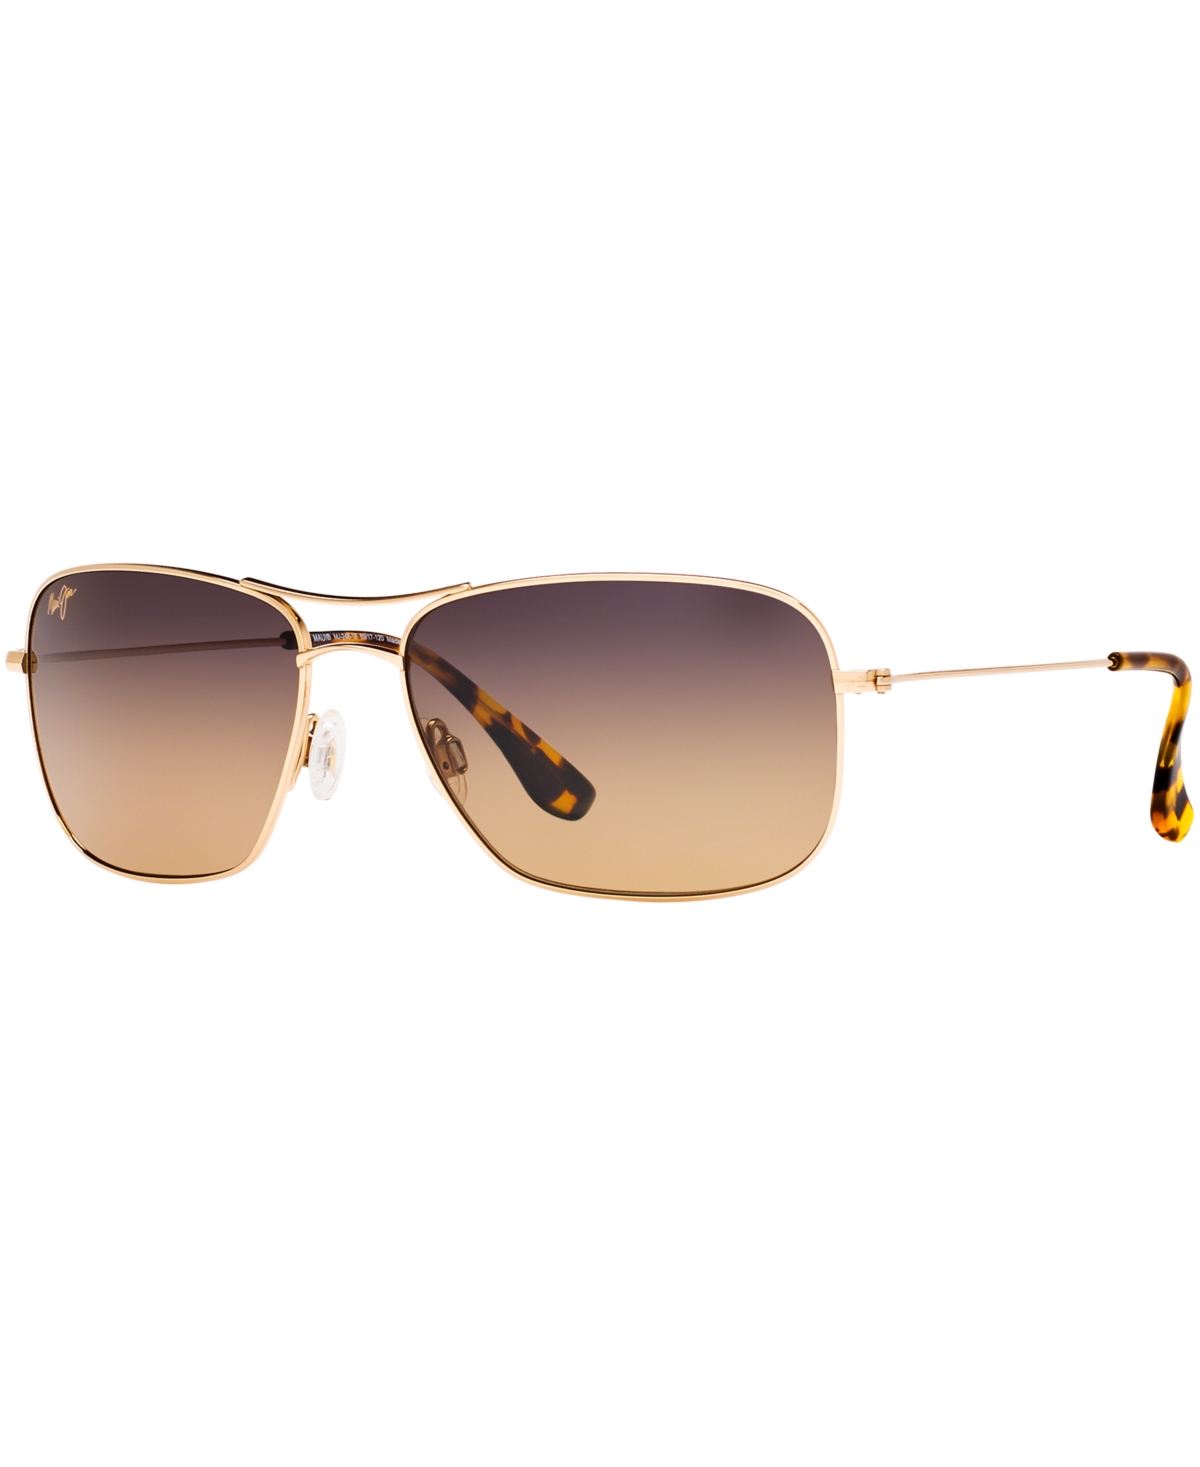 Maui Jim Wiki Wiki Polarized Sunglasses , 246 In Gold,brown